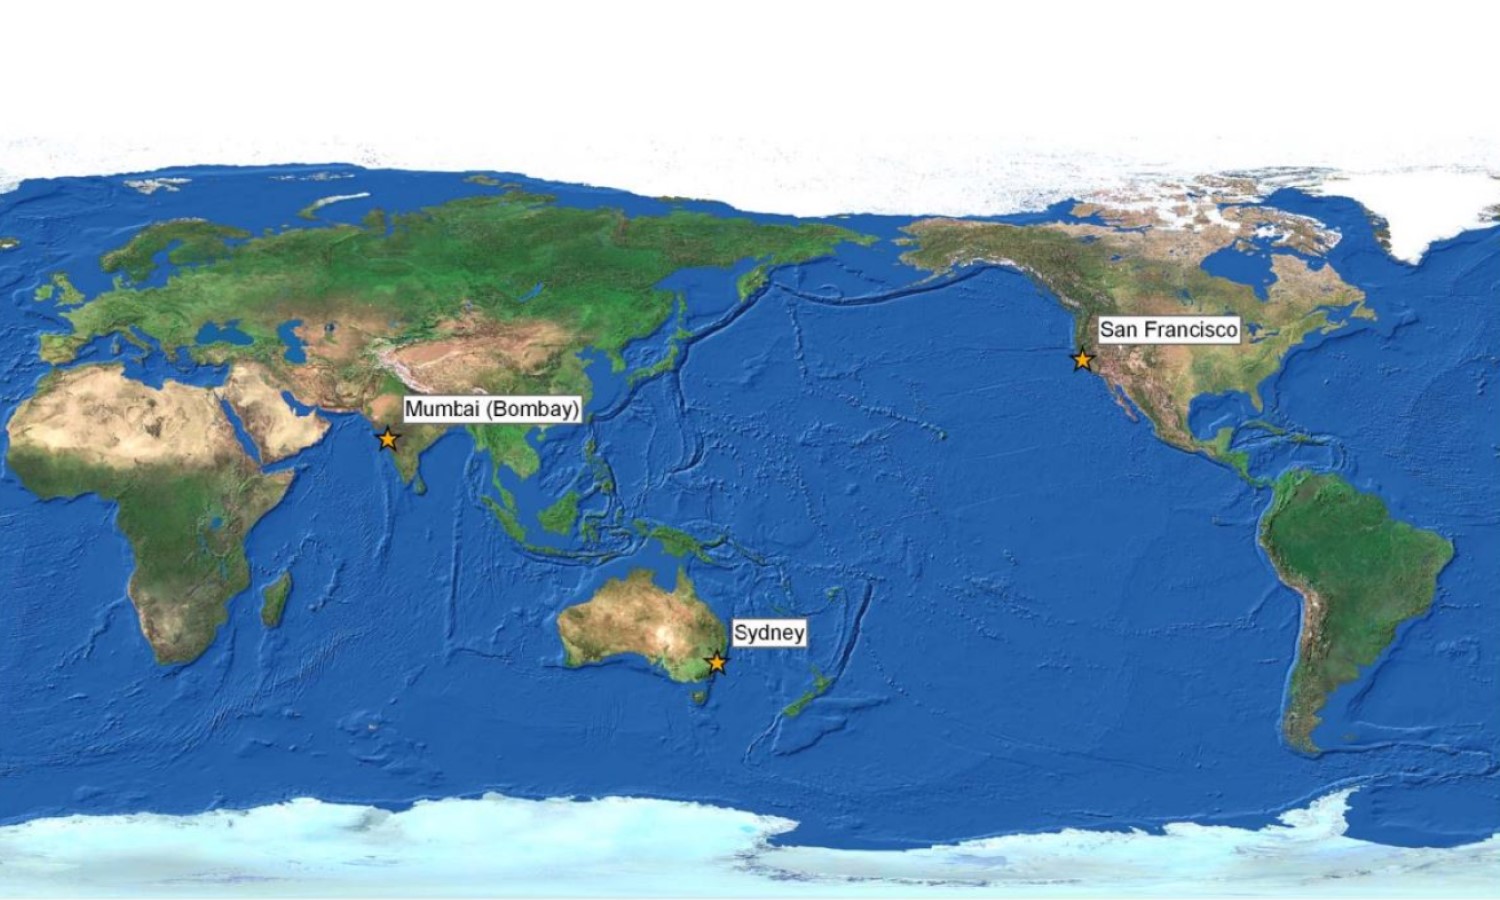 tectonic plate map worksheet